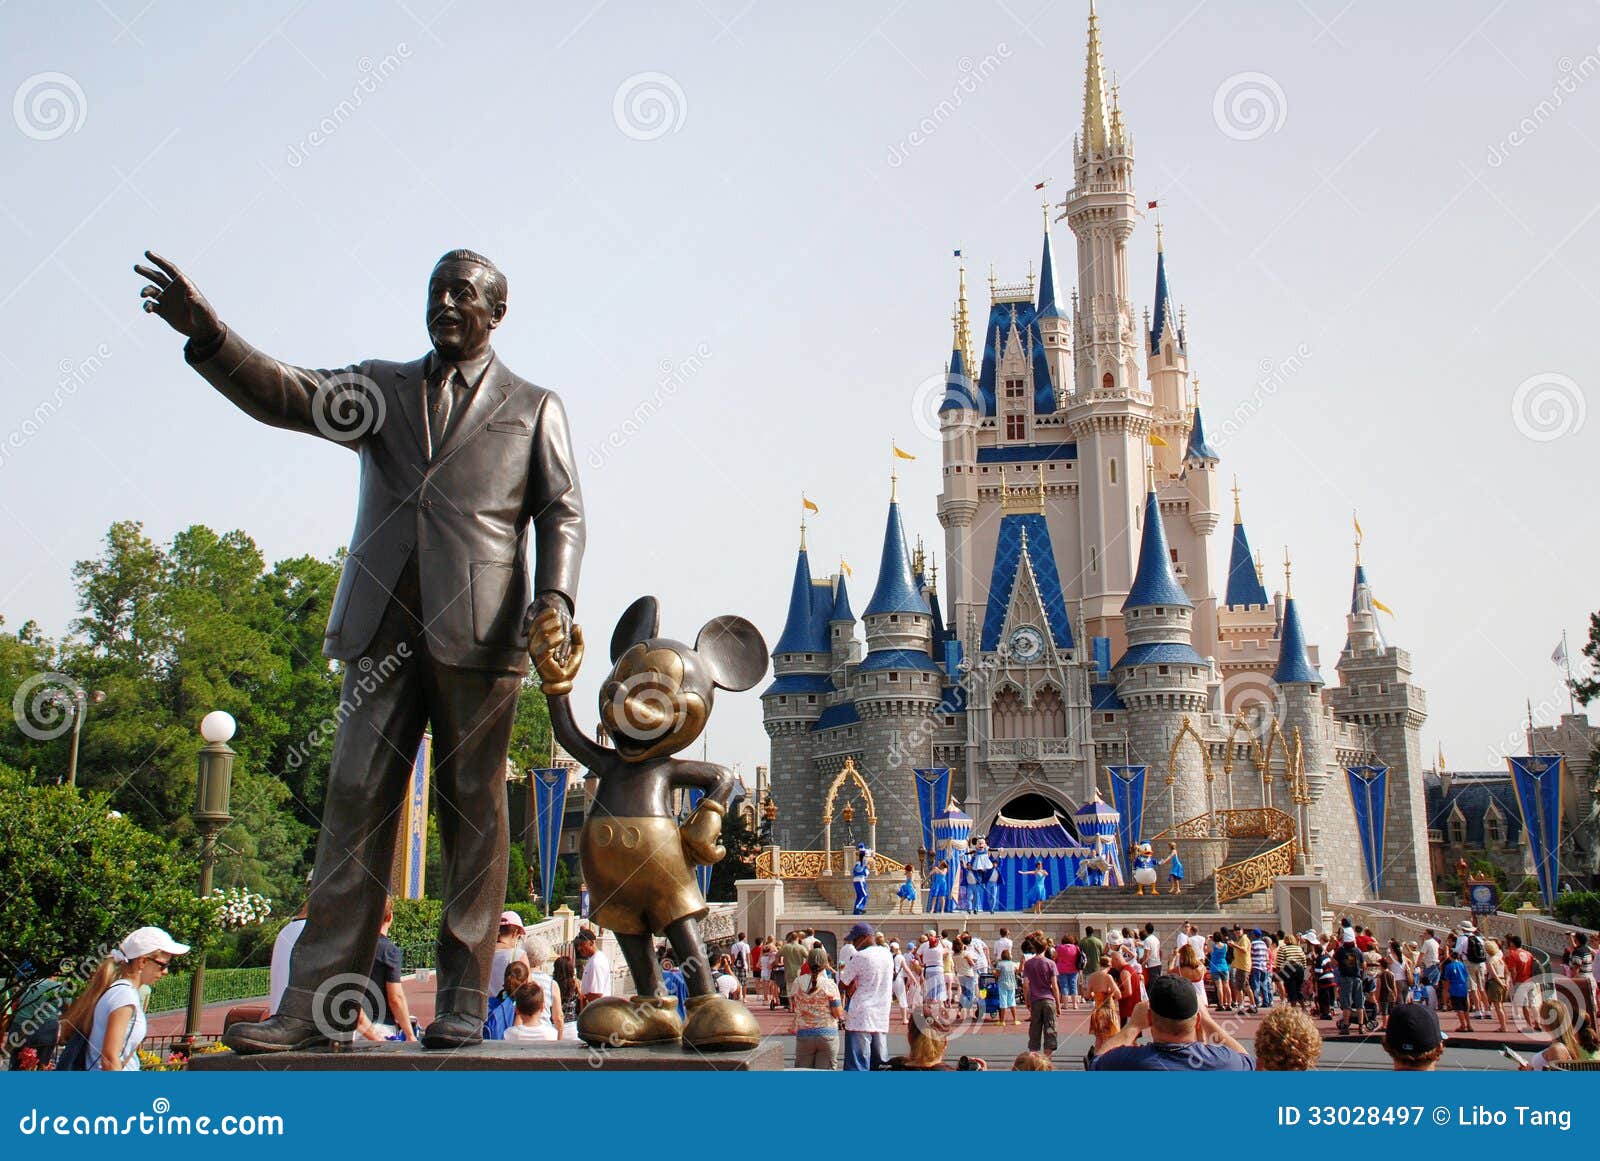 Cinderella Disney Castle in magic kingdom, disney world Orlando 